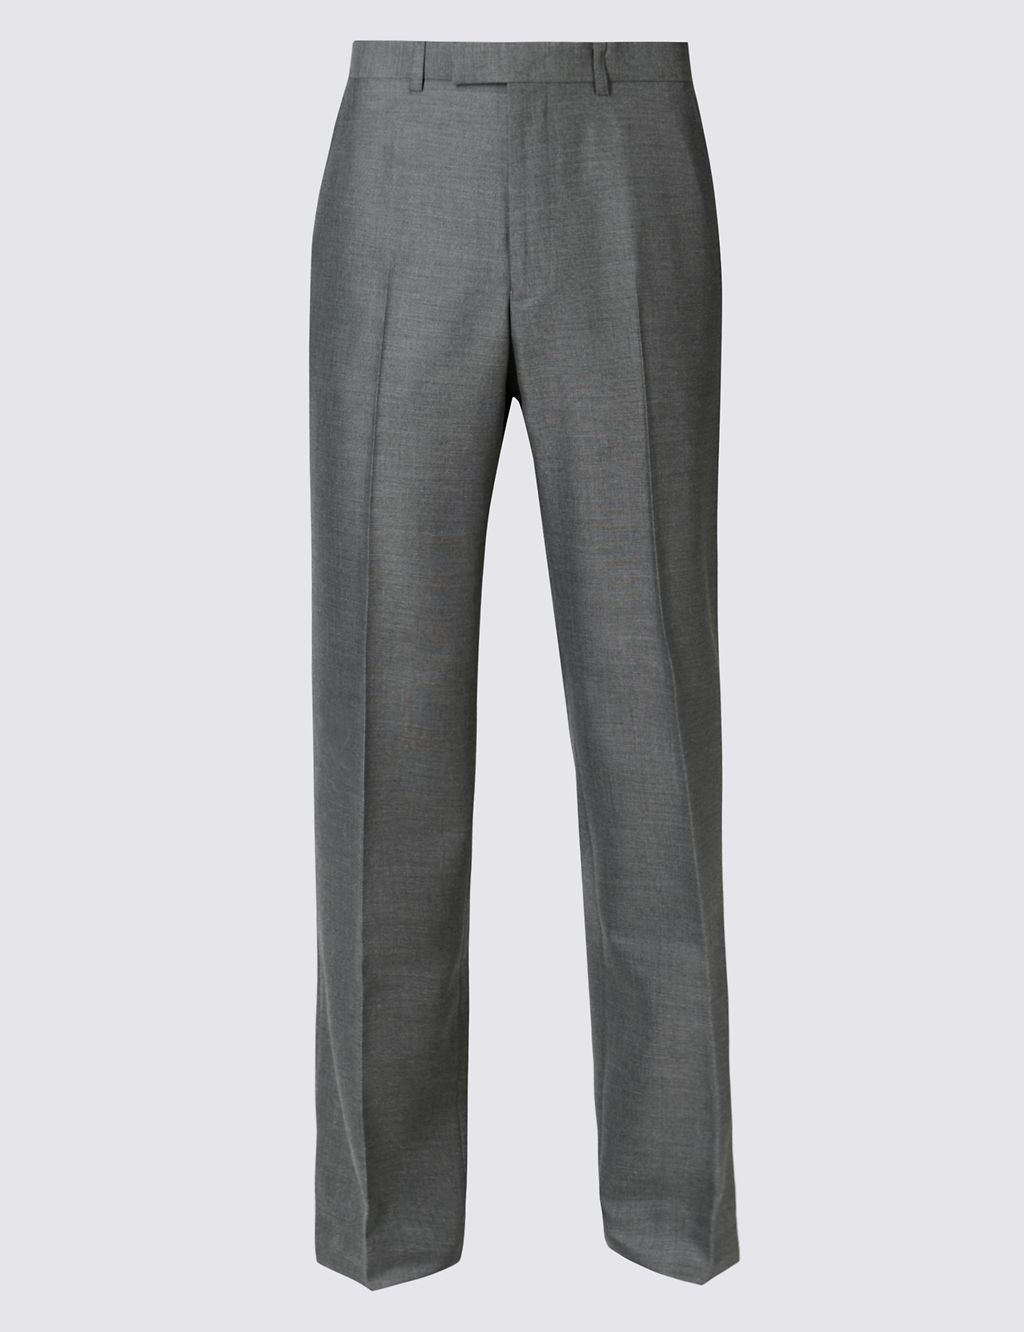 Grey Regular Fit Trousers 1 of 6